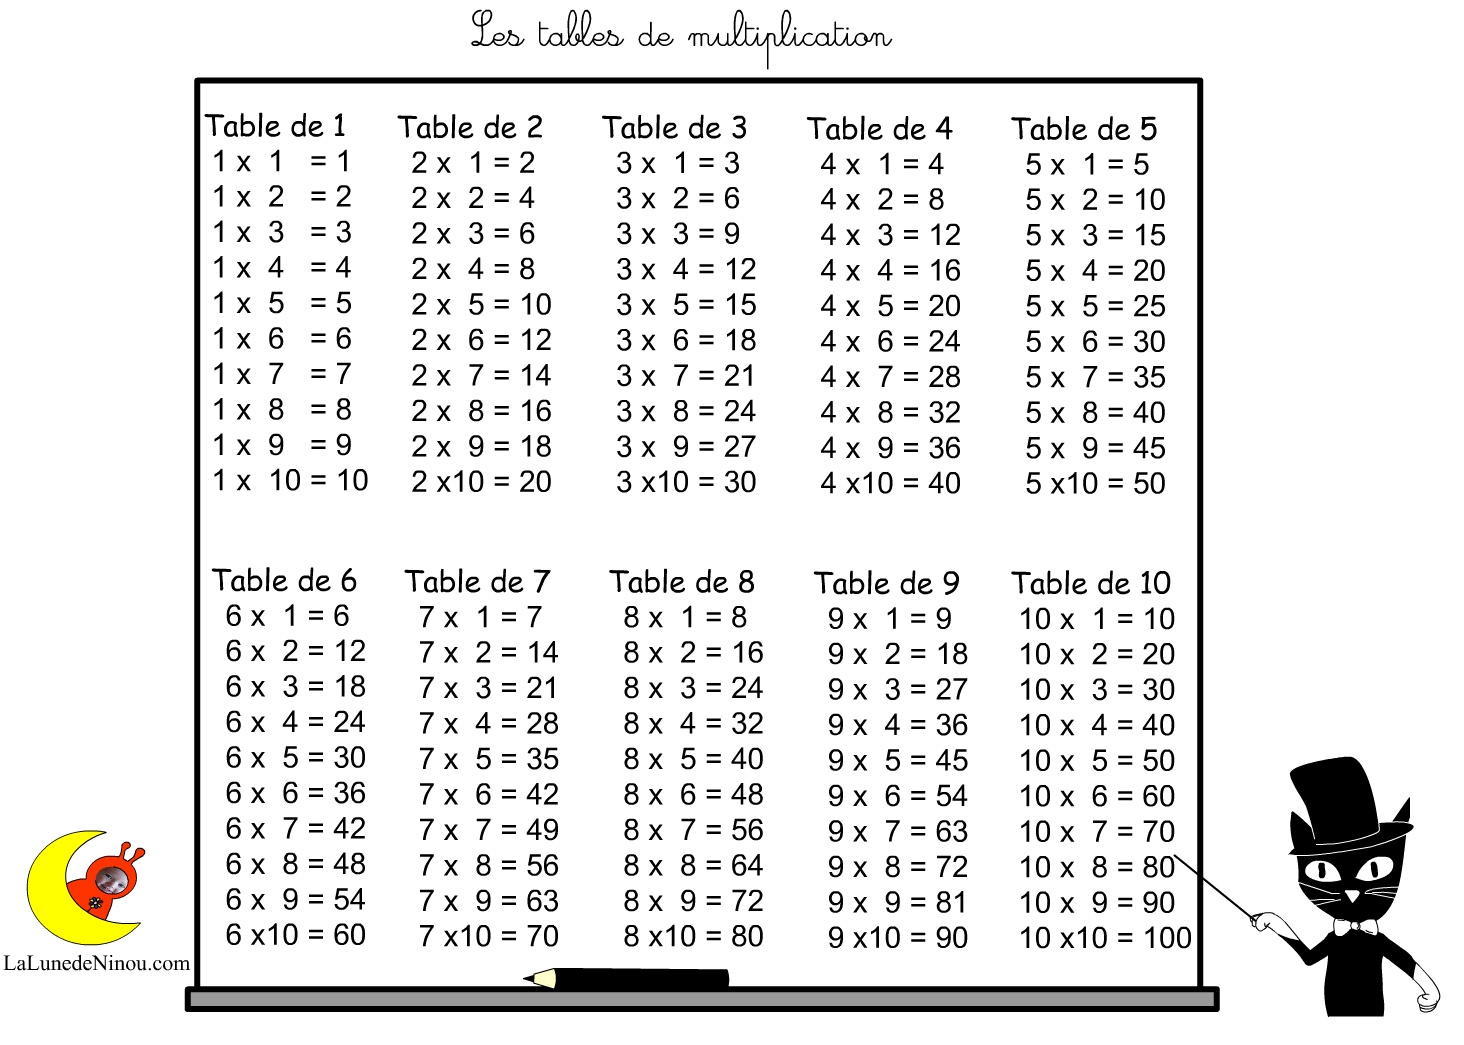 menu jeux tables multiplication multiplicator